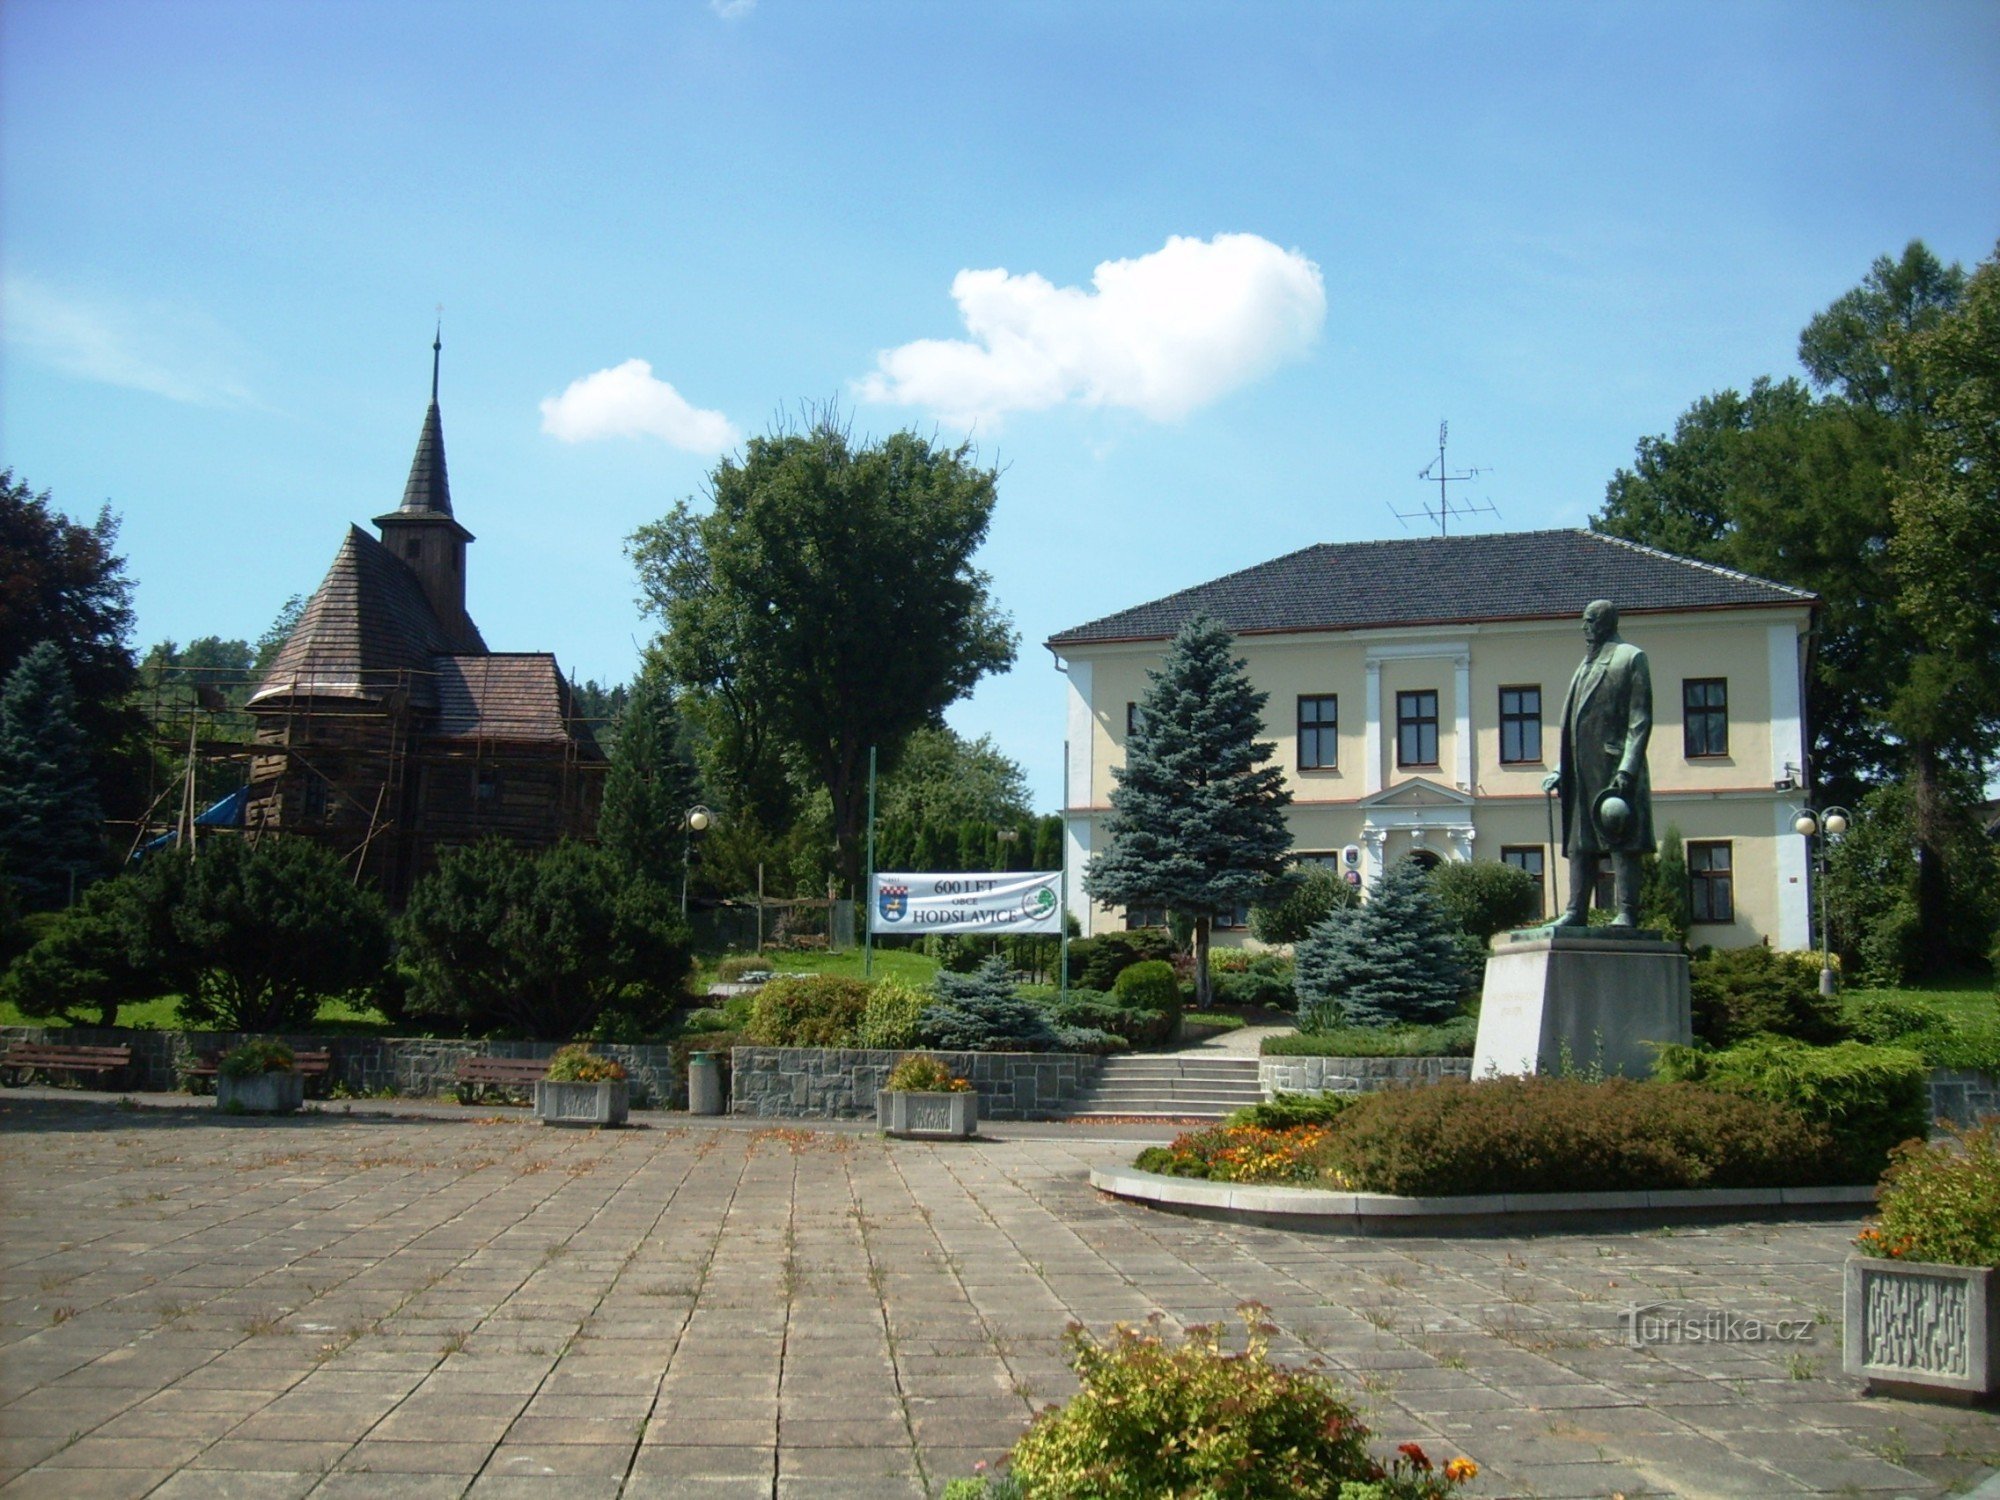 Hodslavice község központja